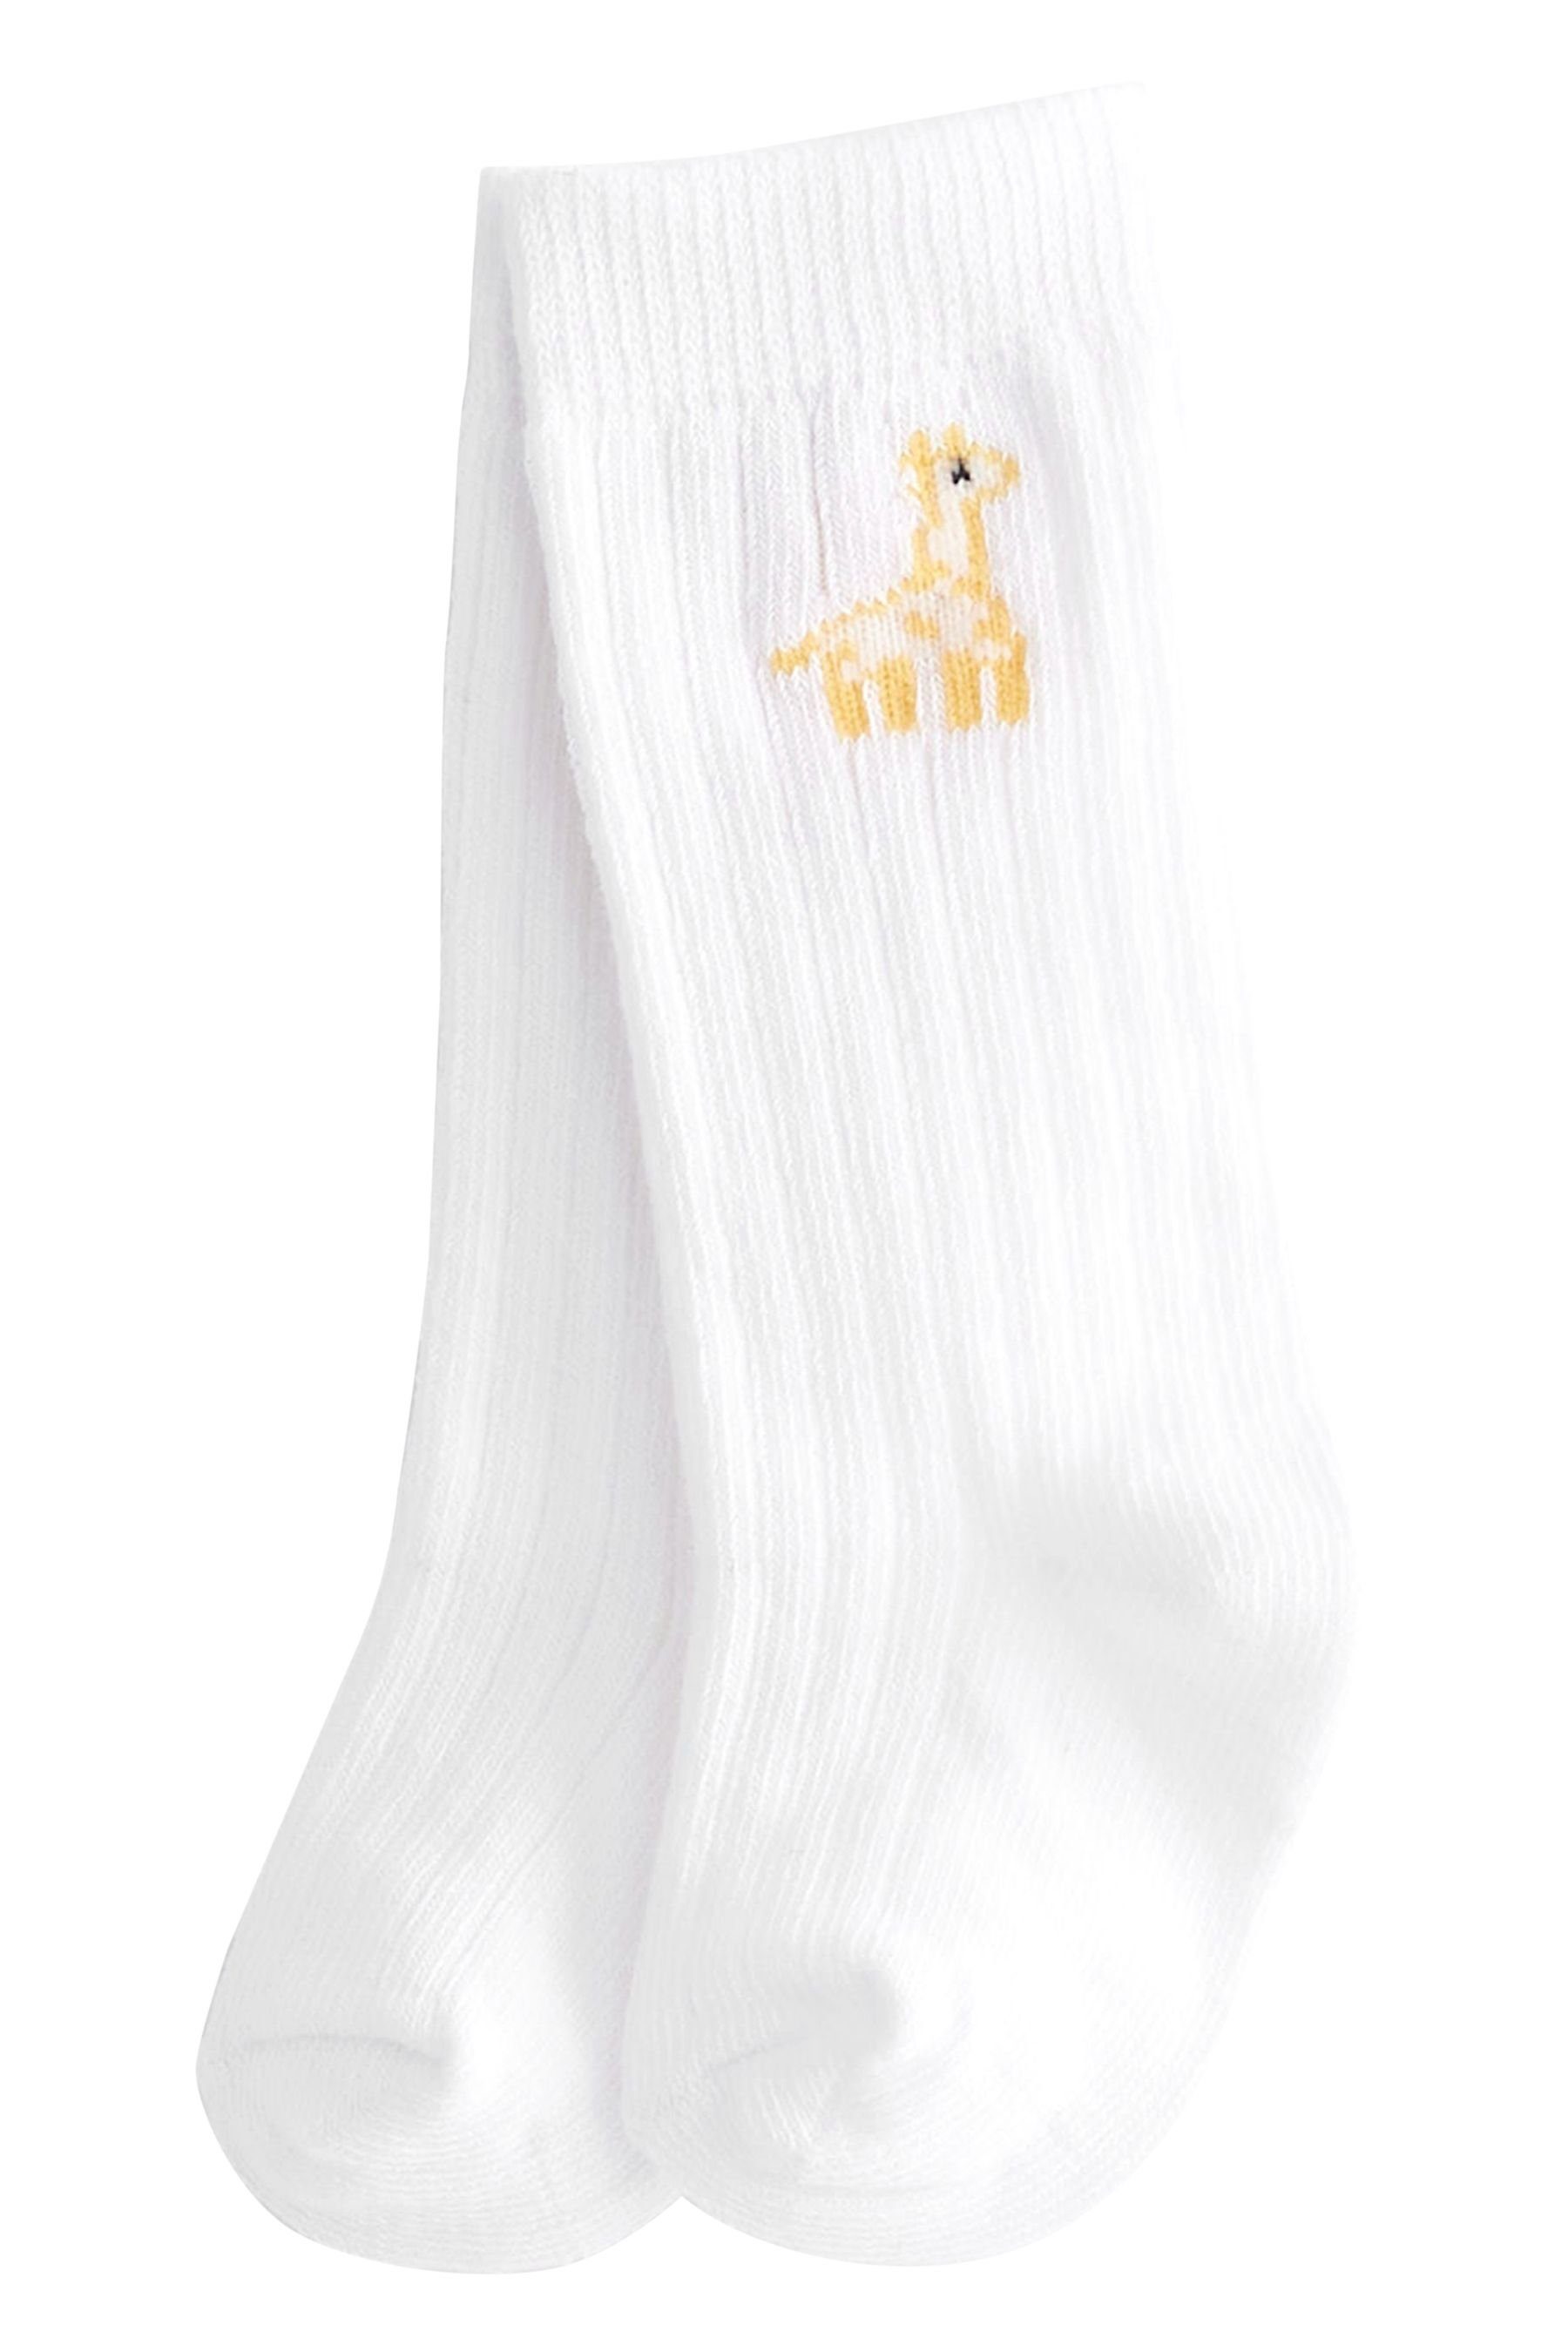 Next Hemd & Hose White kurzer elegantem (3-tlg) Socken Babyset mit Hemd, und Hose